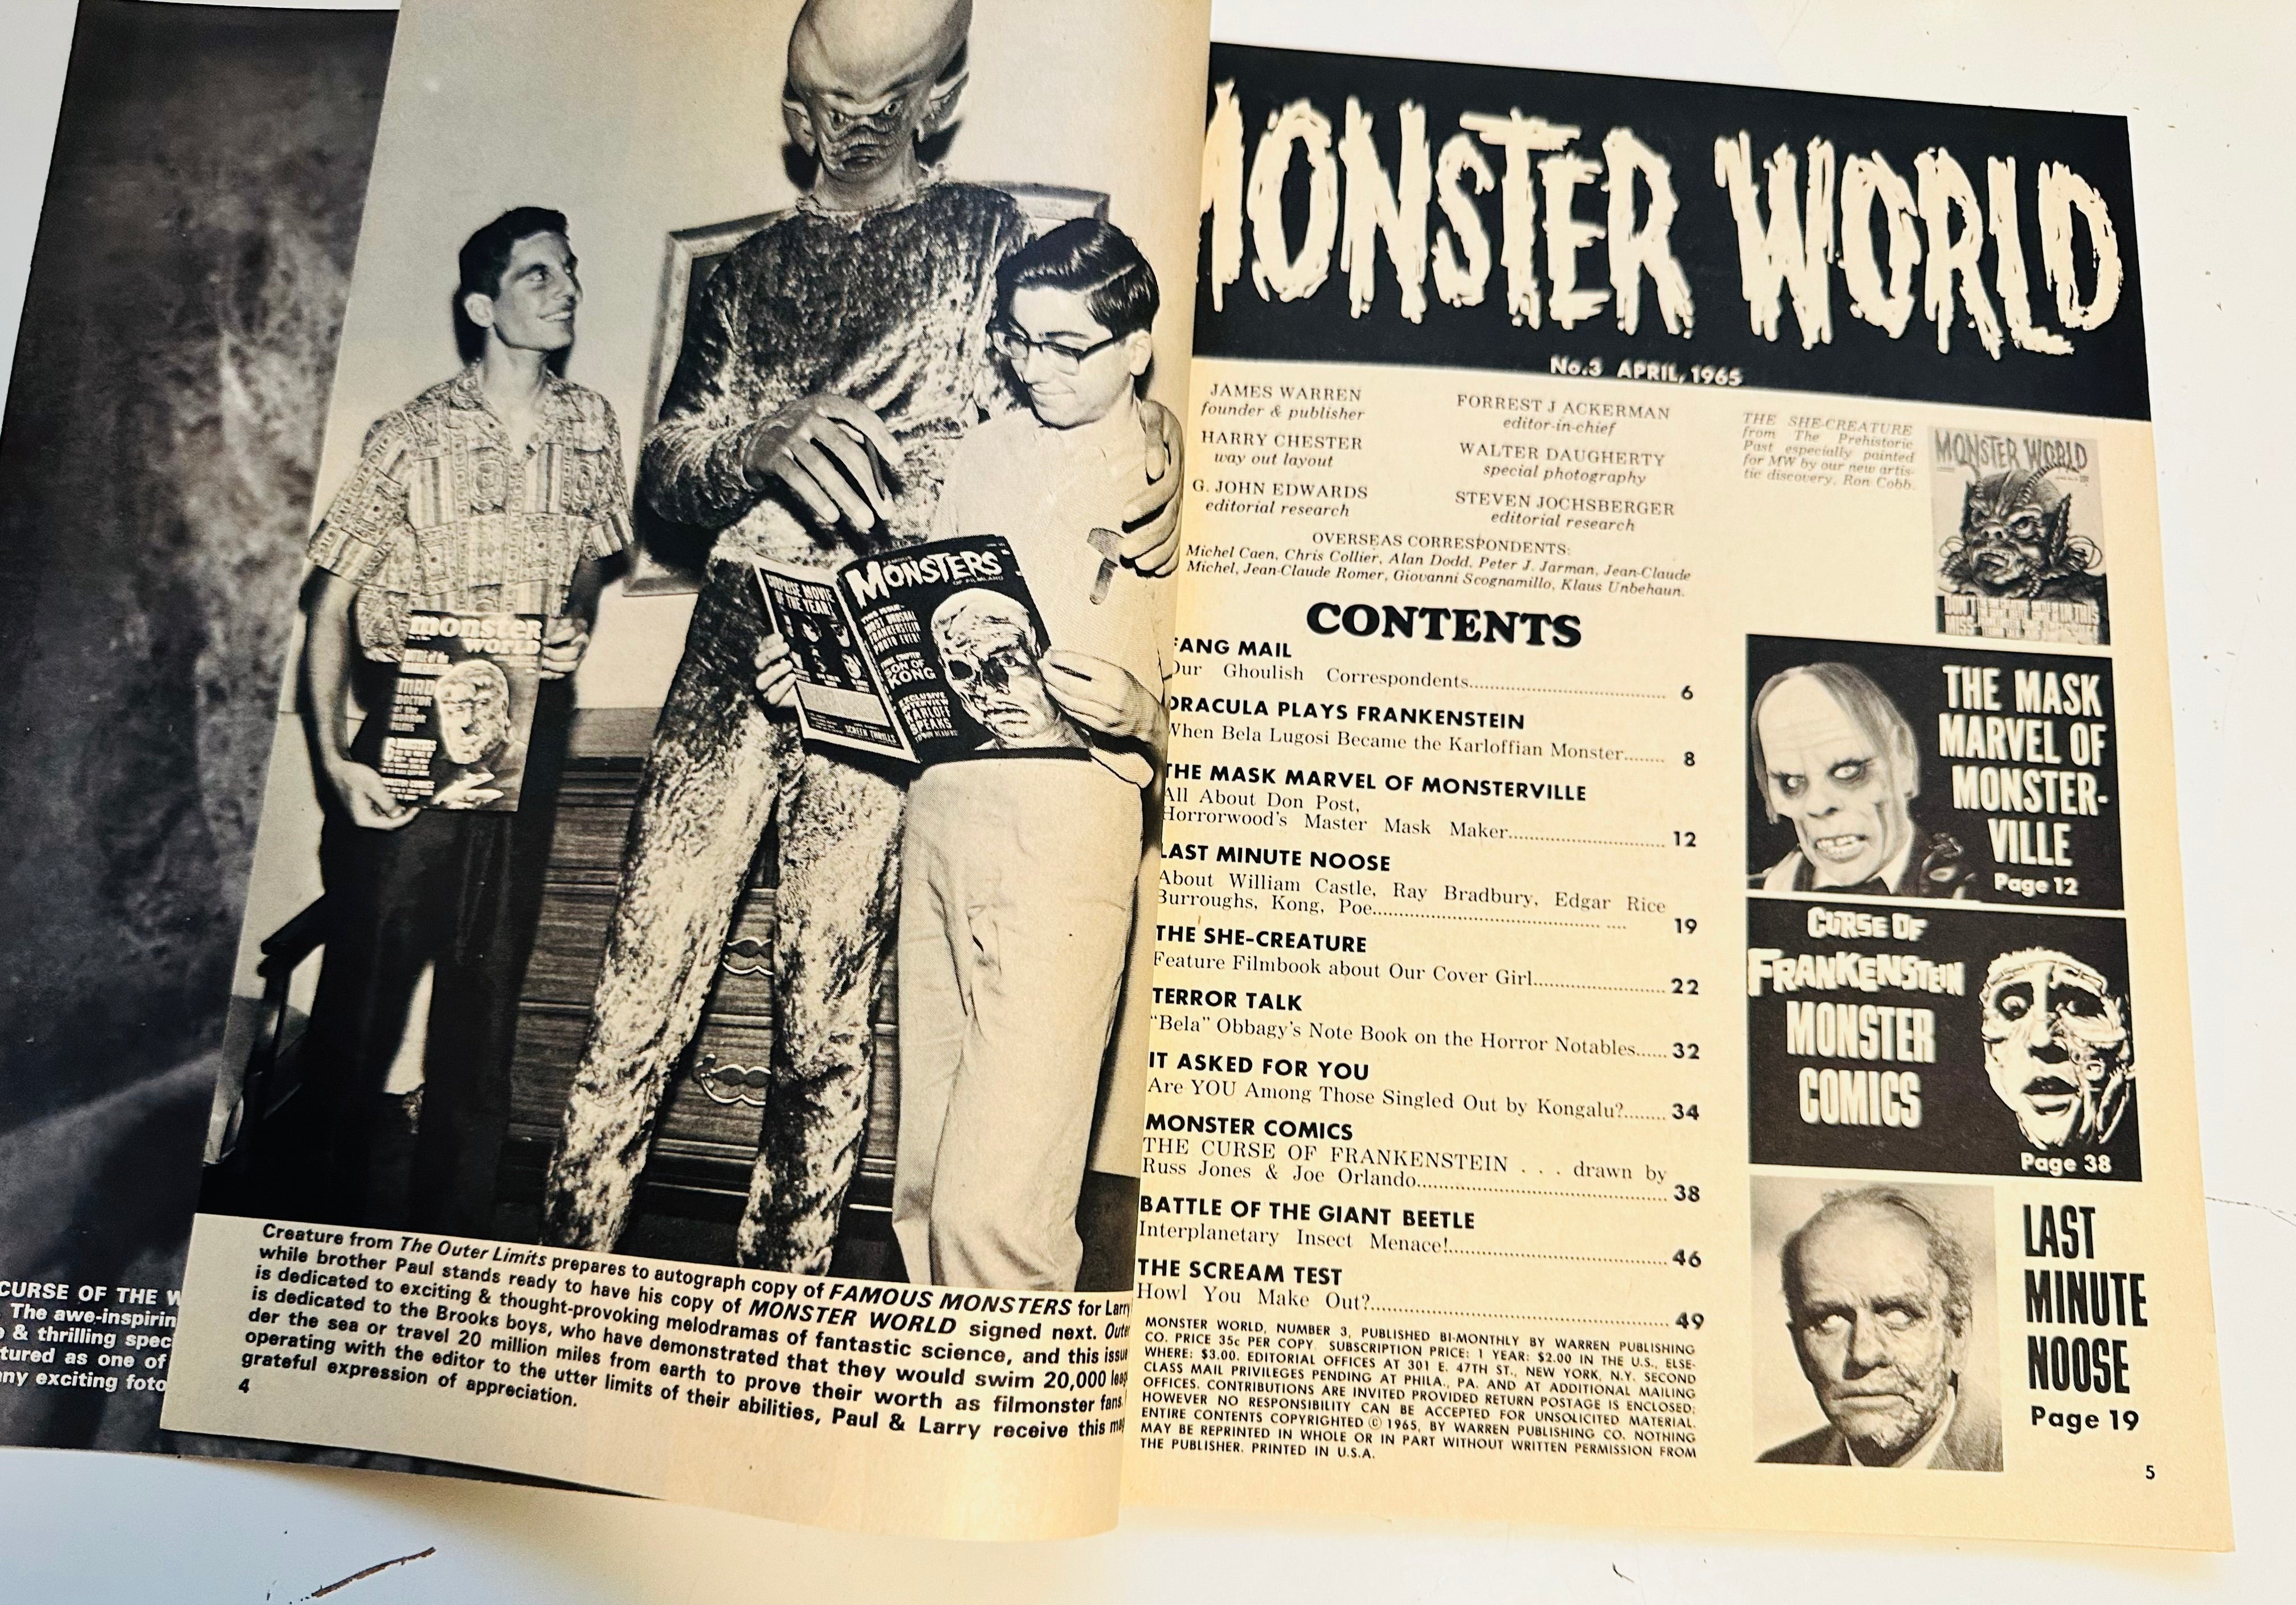 Monster World #3 rare high grade condition magazine issue 1965